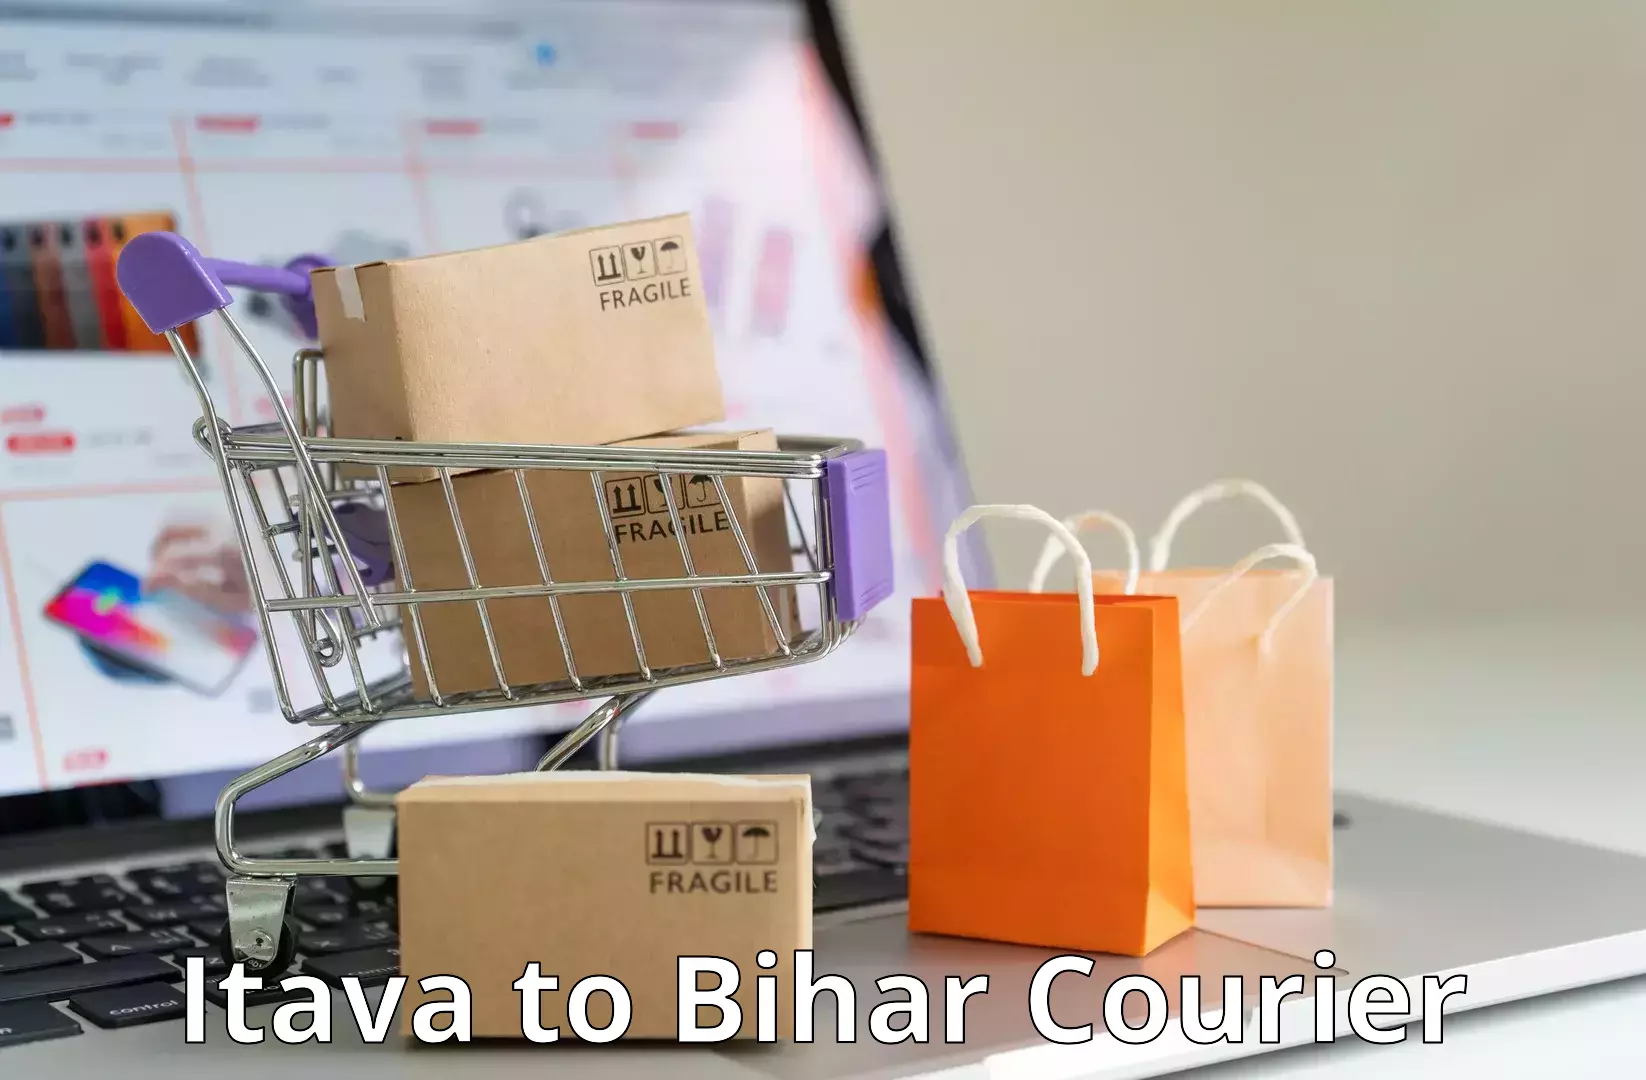 Courier insurance Itava to Bihar